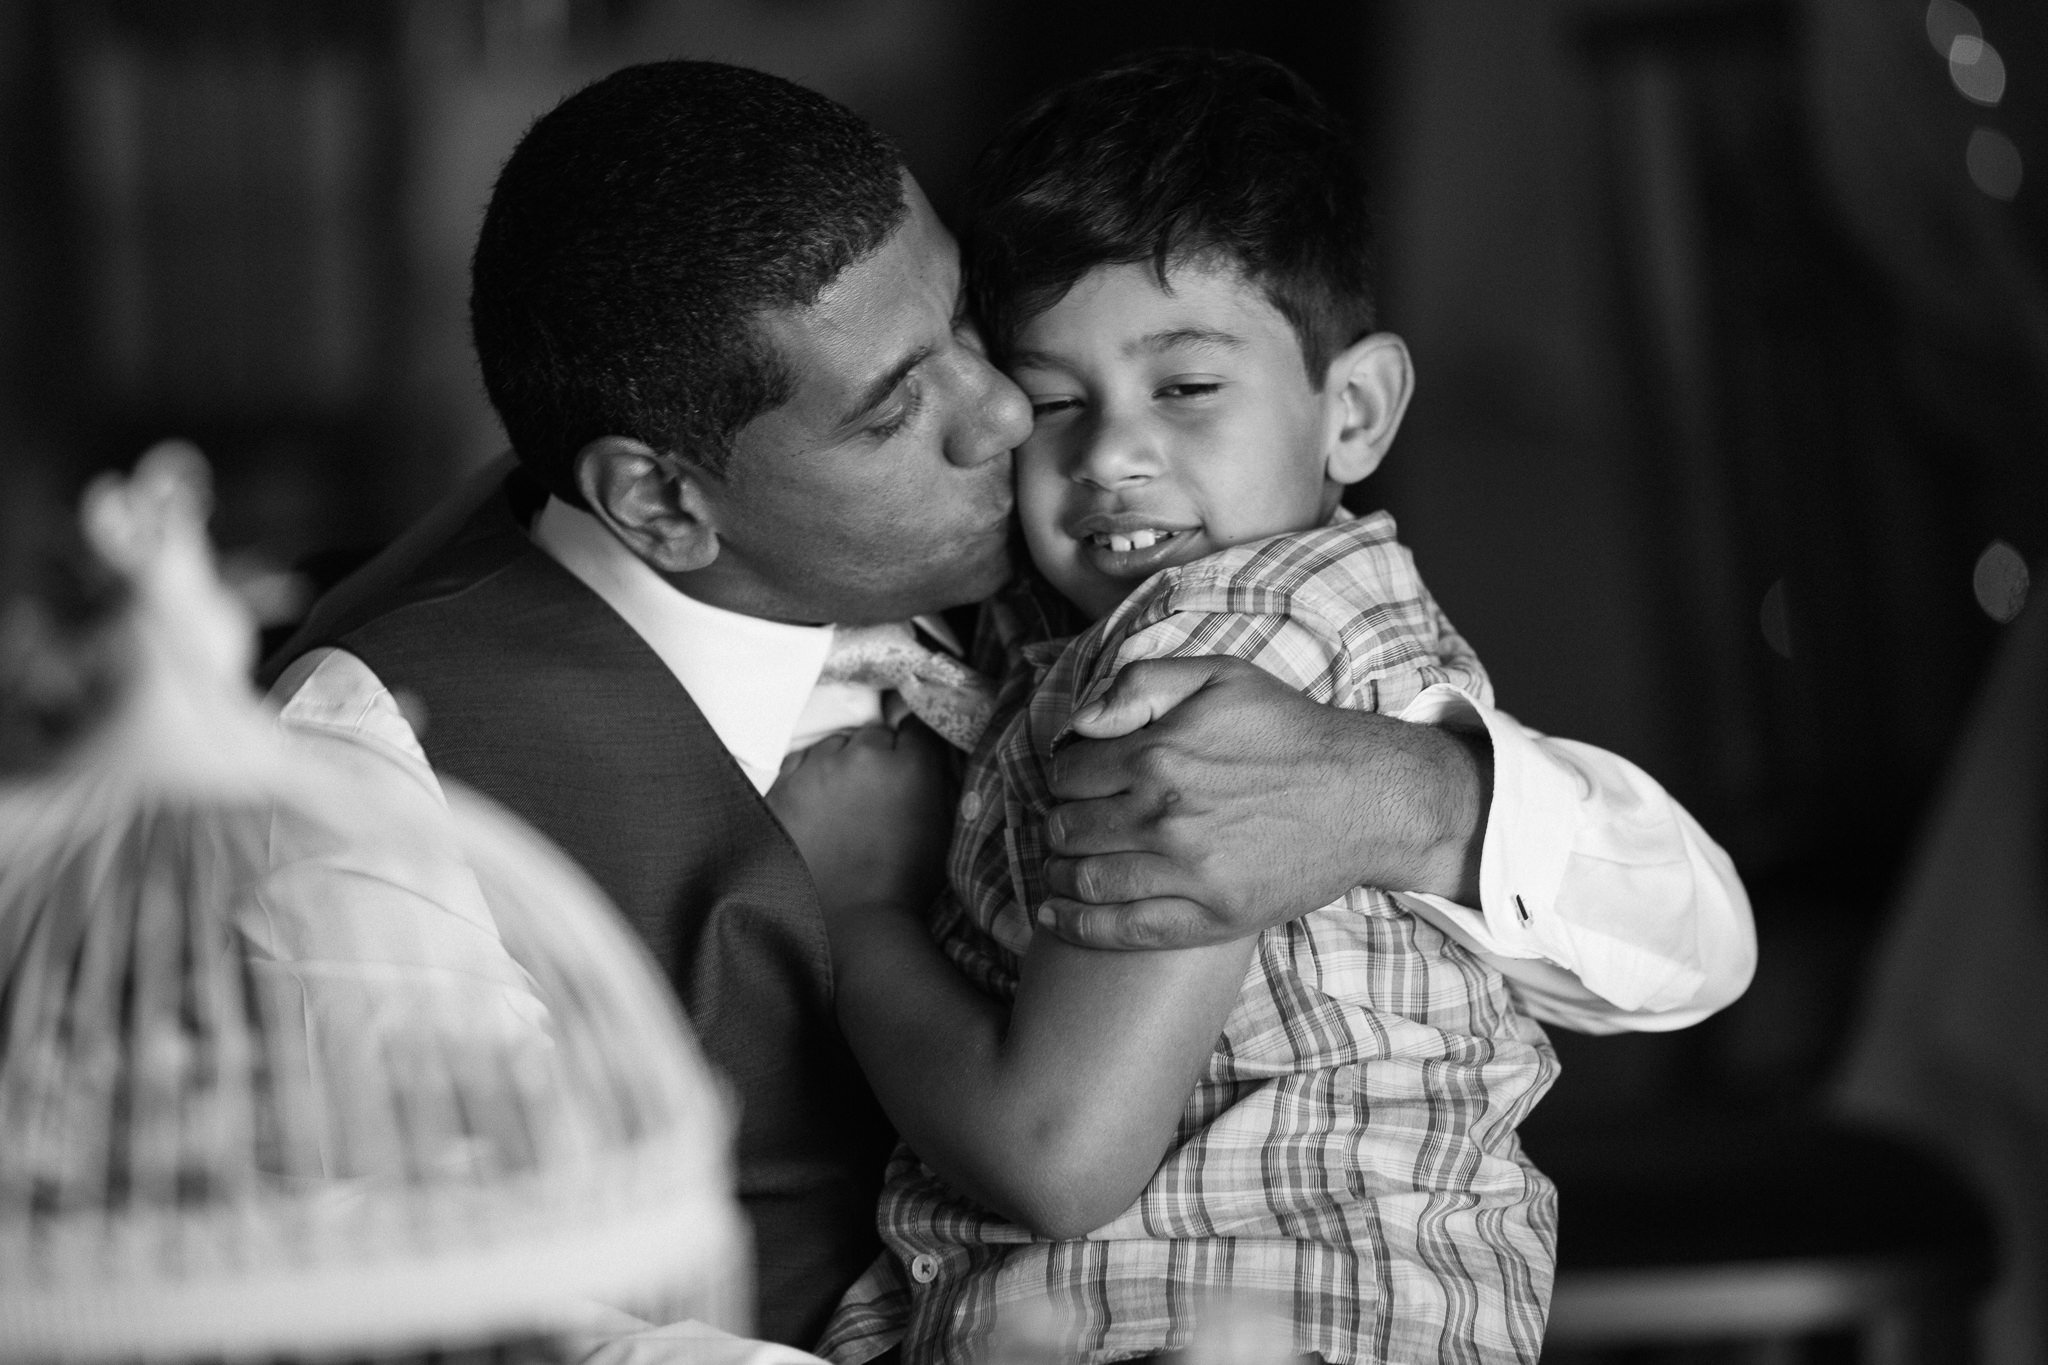  Man kisses his son 